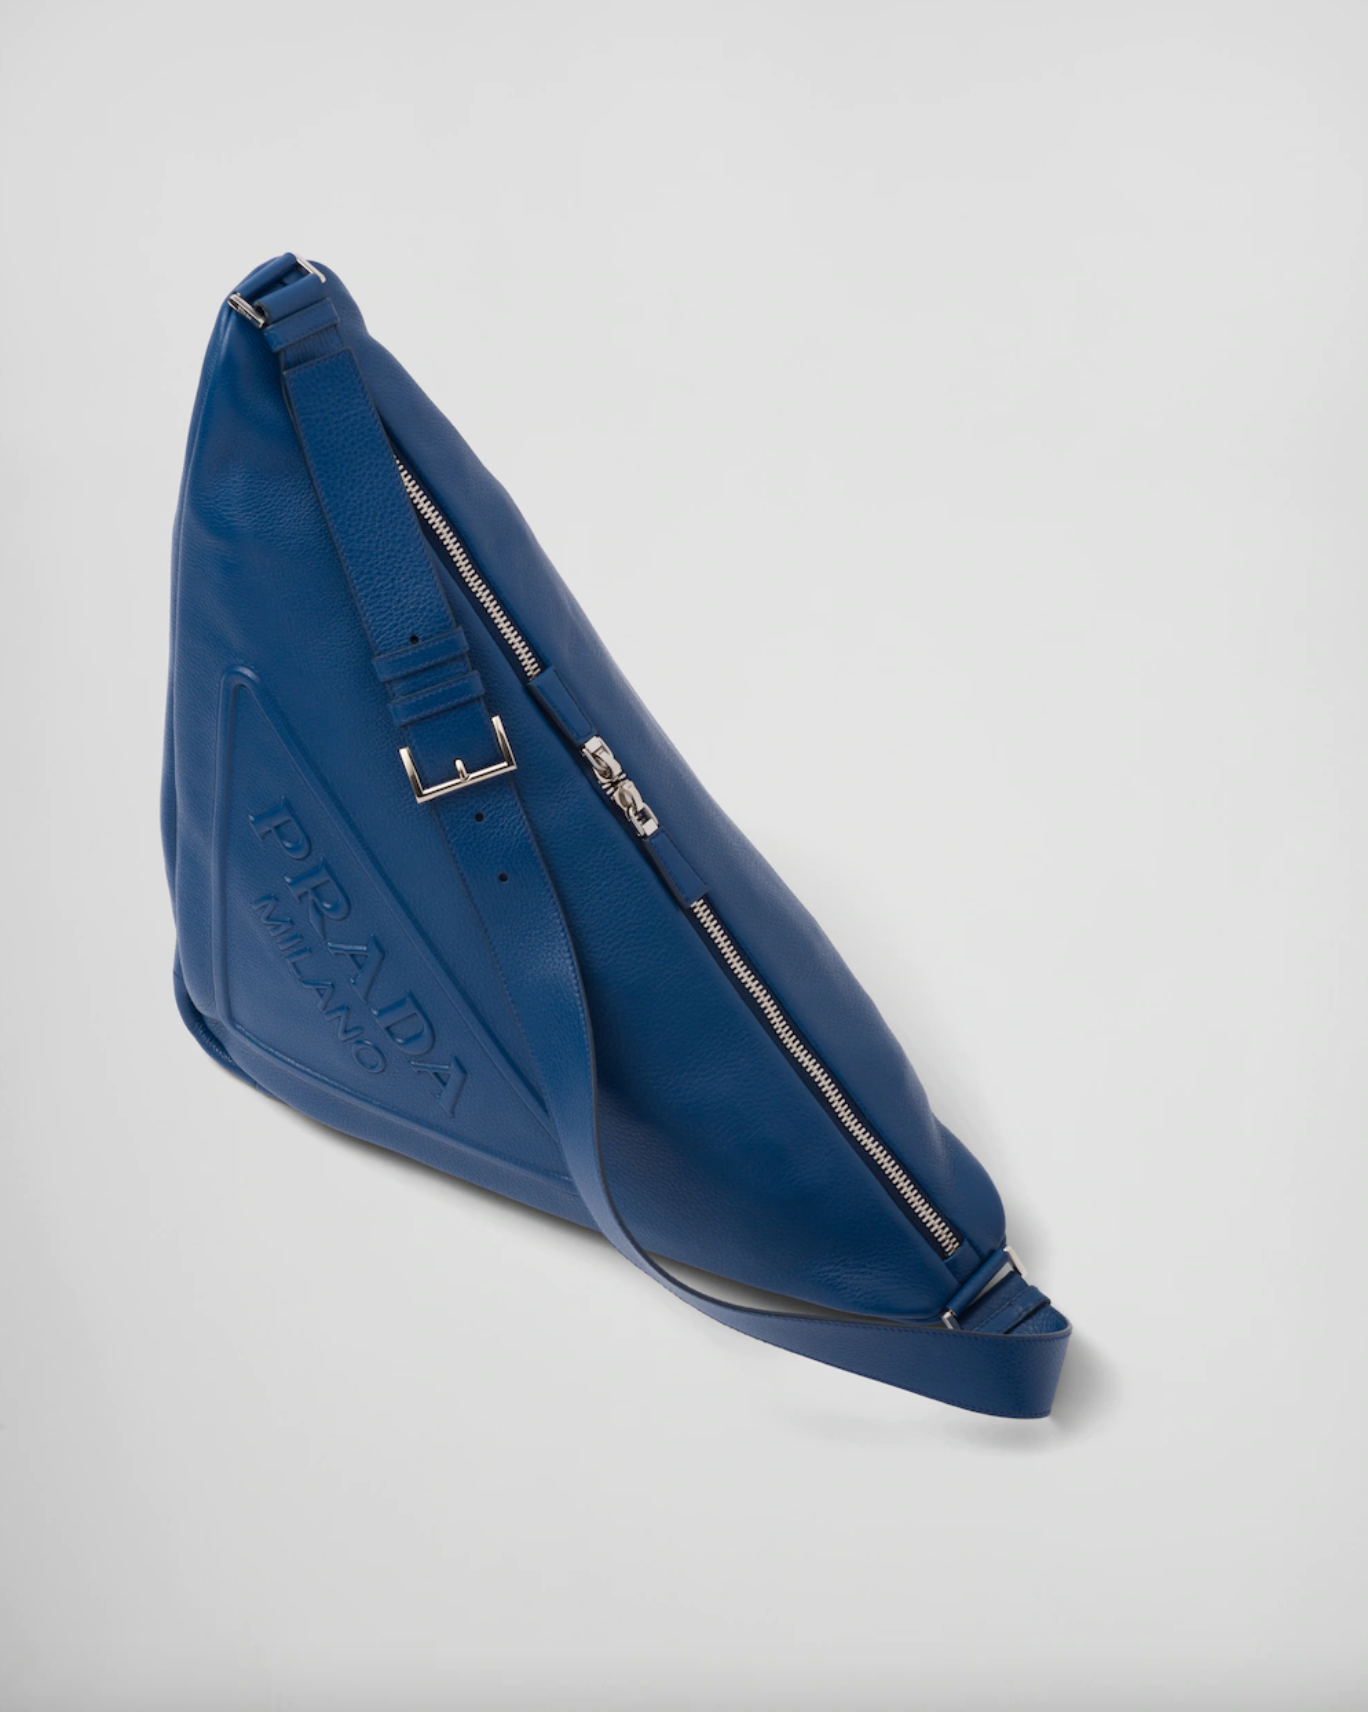 Prada Light Blue Saffiano Leather Bow Continental Wallet